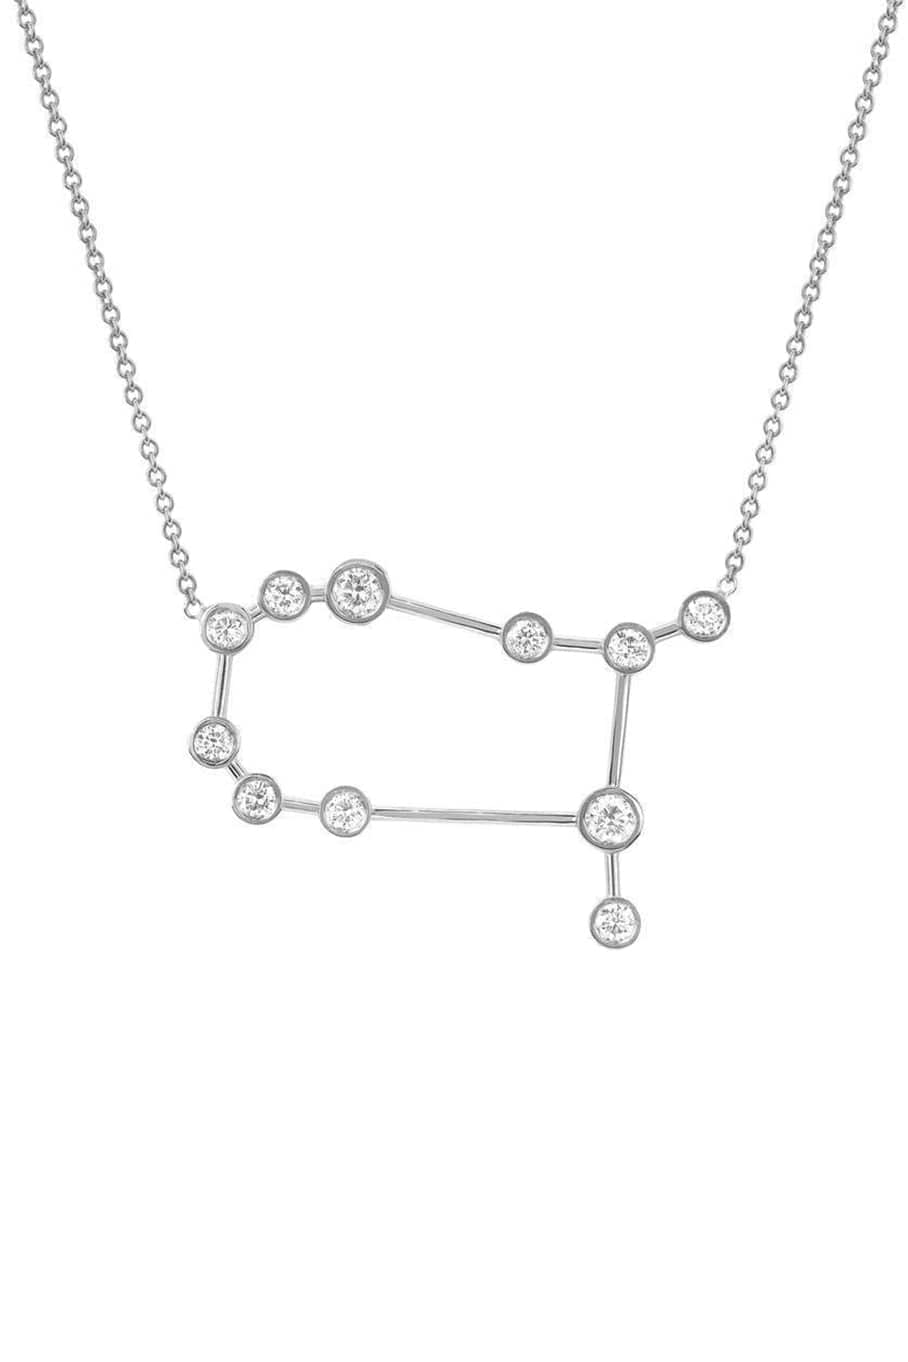 LOGAN HOLLOWELL-Gemini Diamond Constellation Necklace-WHITE GOLD